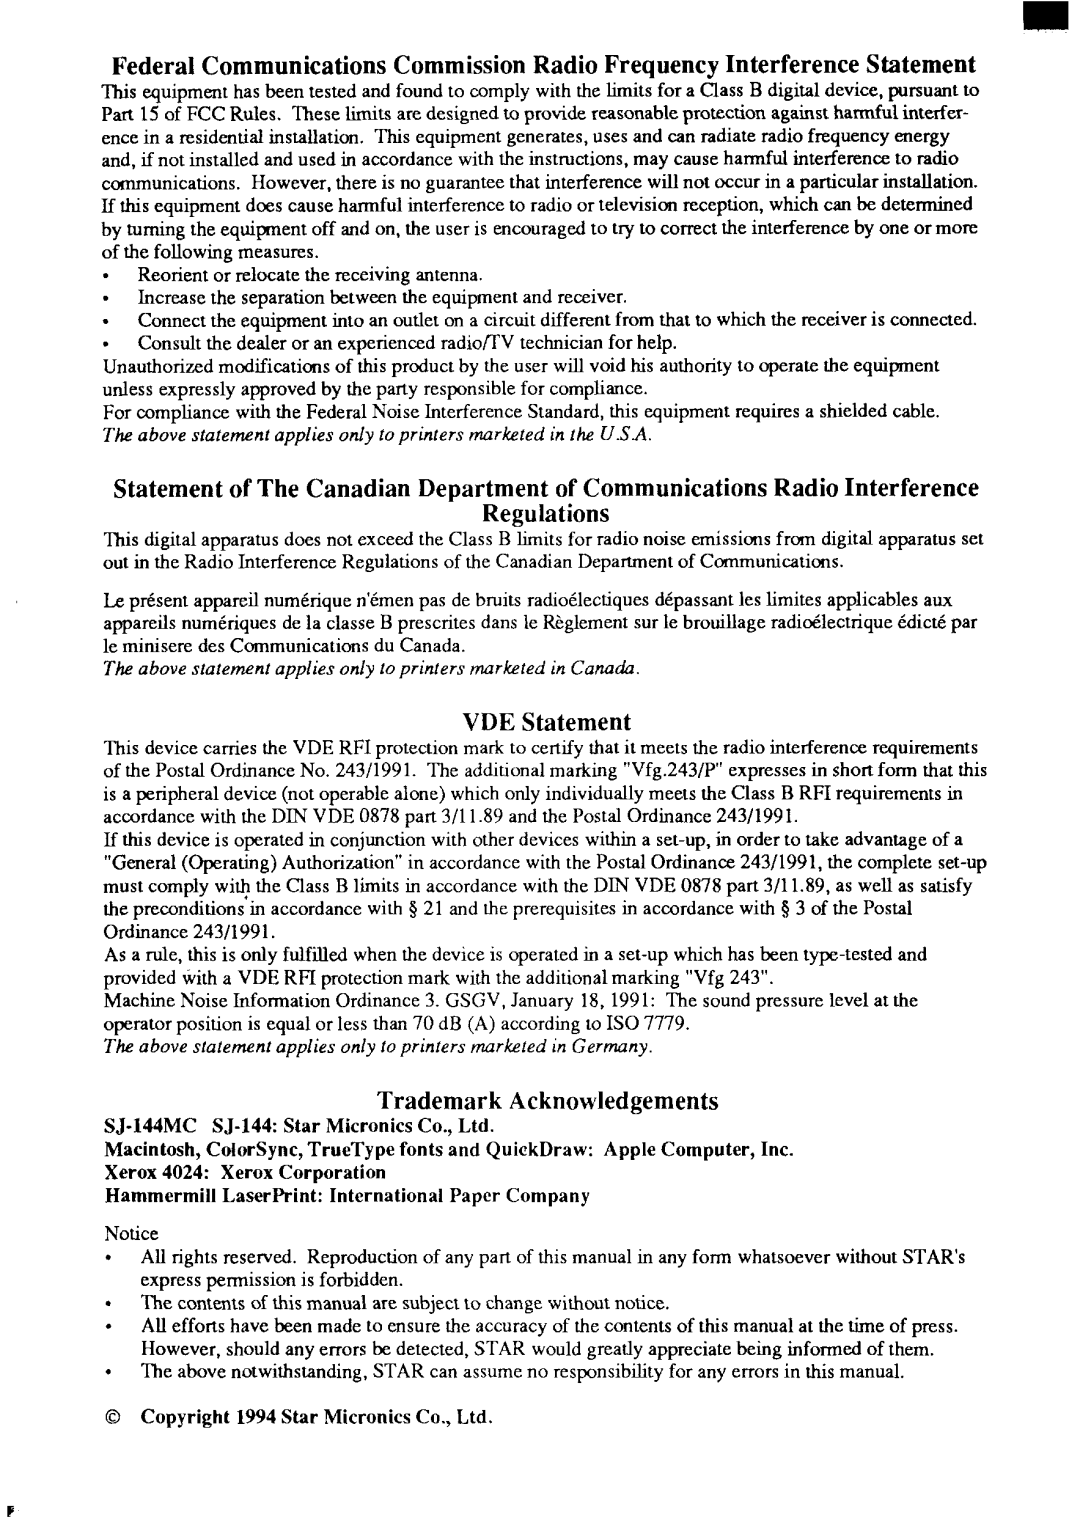 Star Micronics SJ-144MC user manual Regulations, VDE Statement, Trademark Acknowledgements, Xerox 4024 Xerox Corporation 